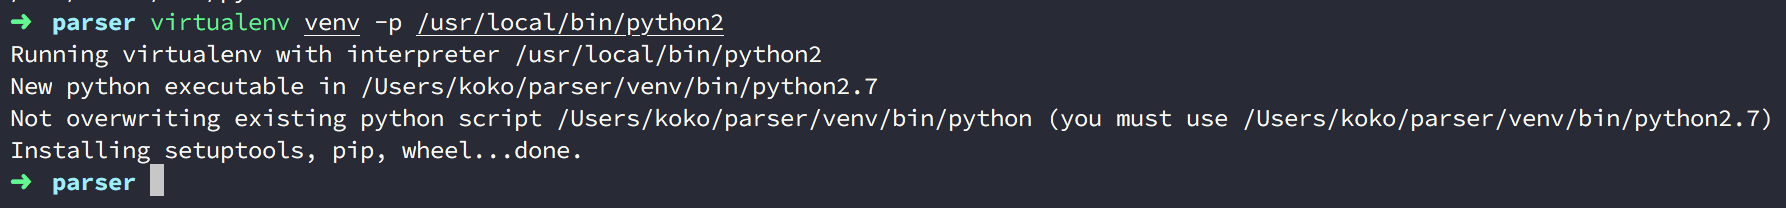 virtualenv-python2-path